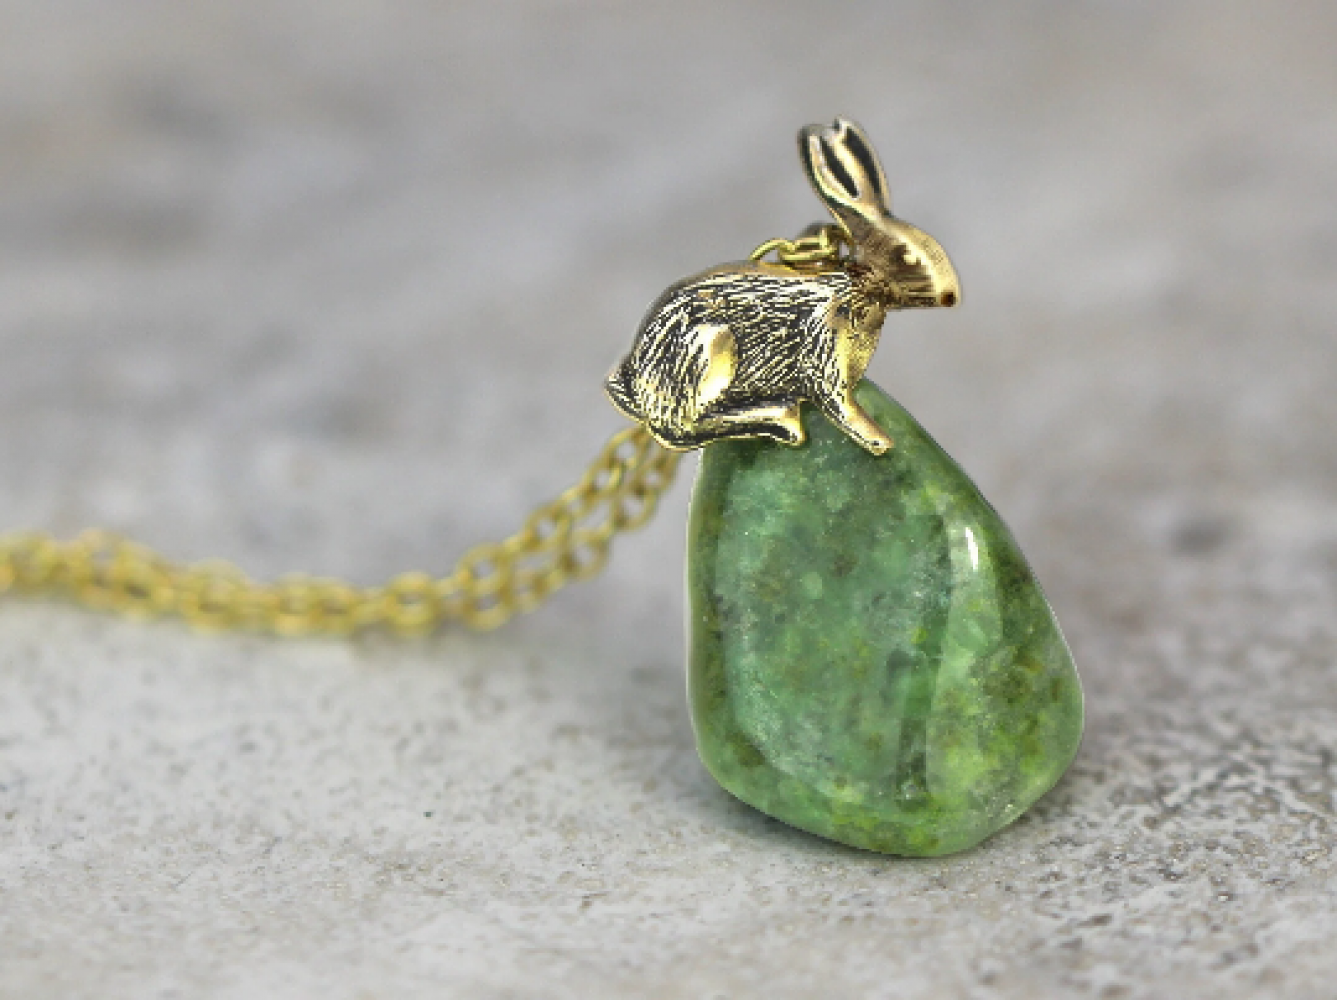 Bunny rabbit on wyoming jade. Dainty 18k silver necklace